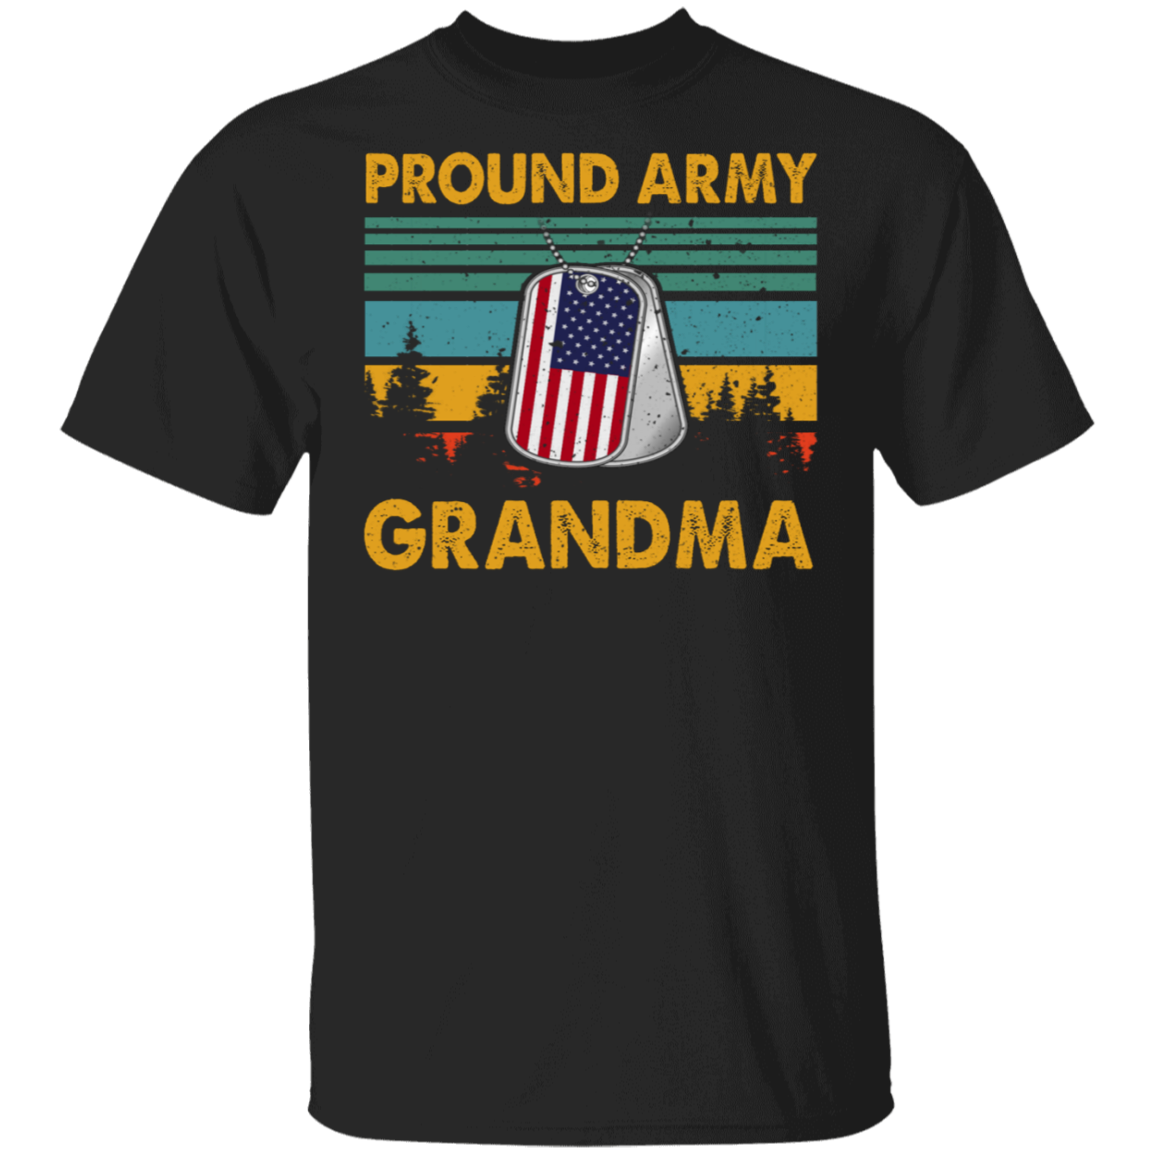 Home › Vintage Retro Proud Army Grandma Cool American Flag Military ...